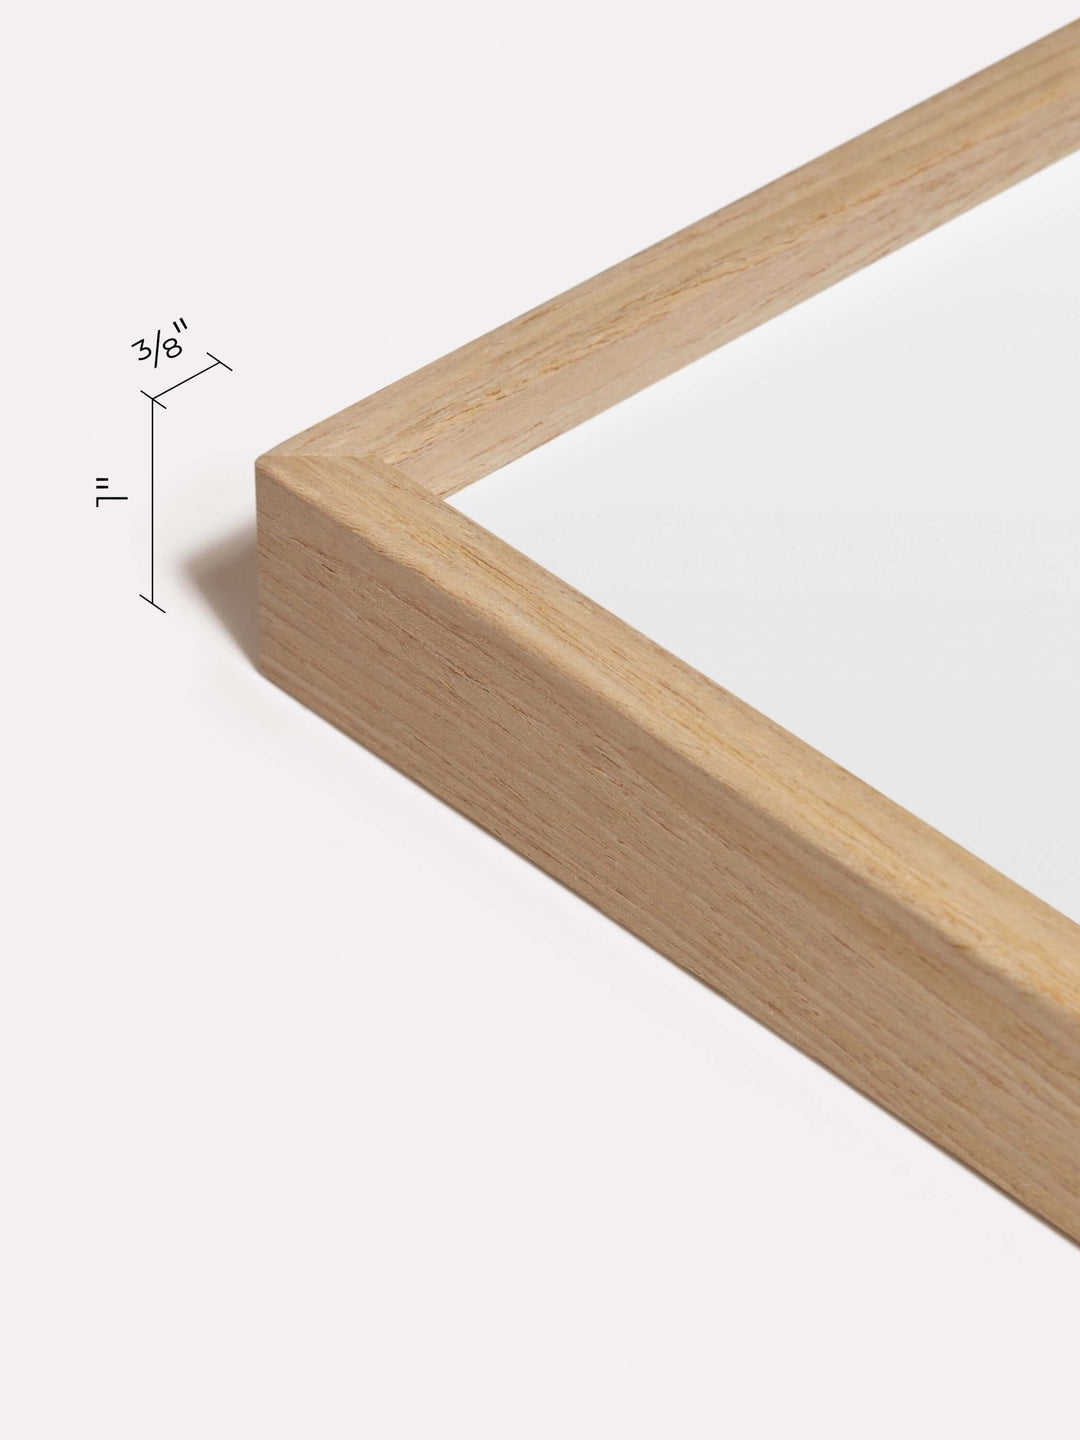 4x6-inch Thin Frame, Oak - Close-up view